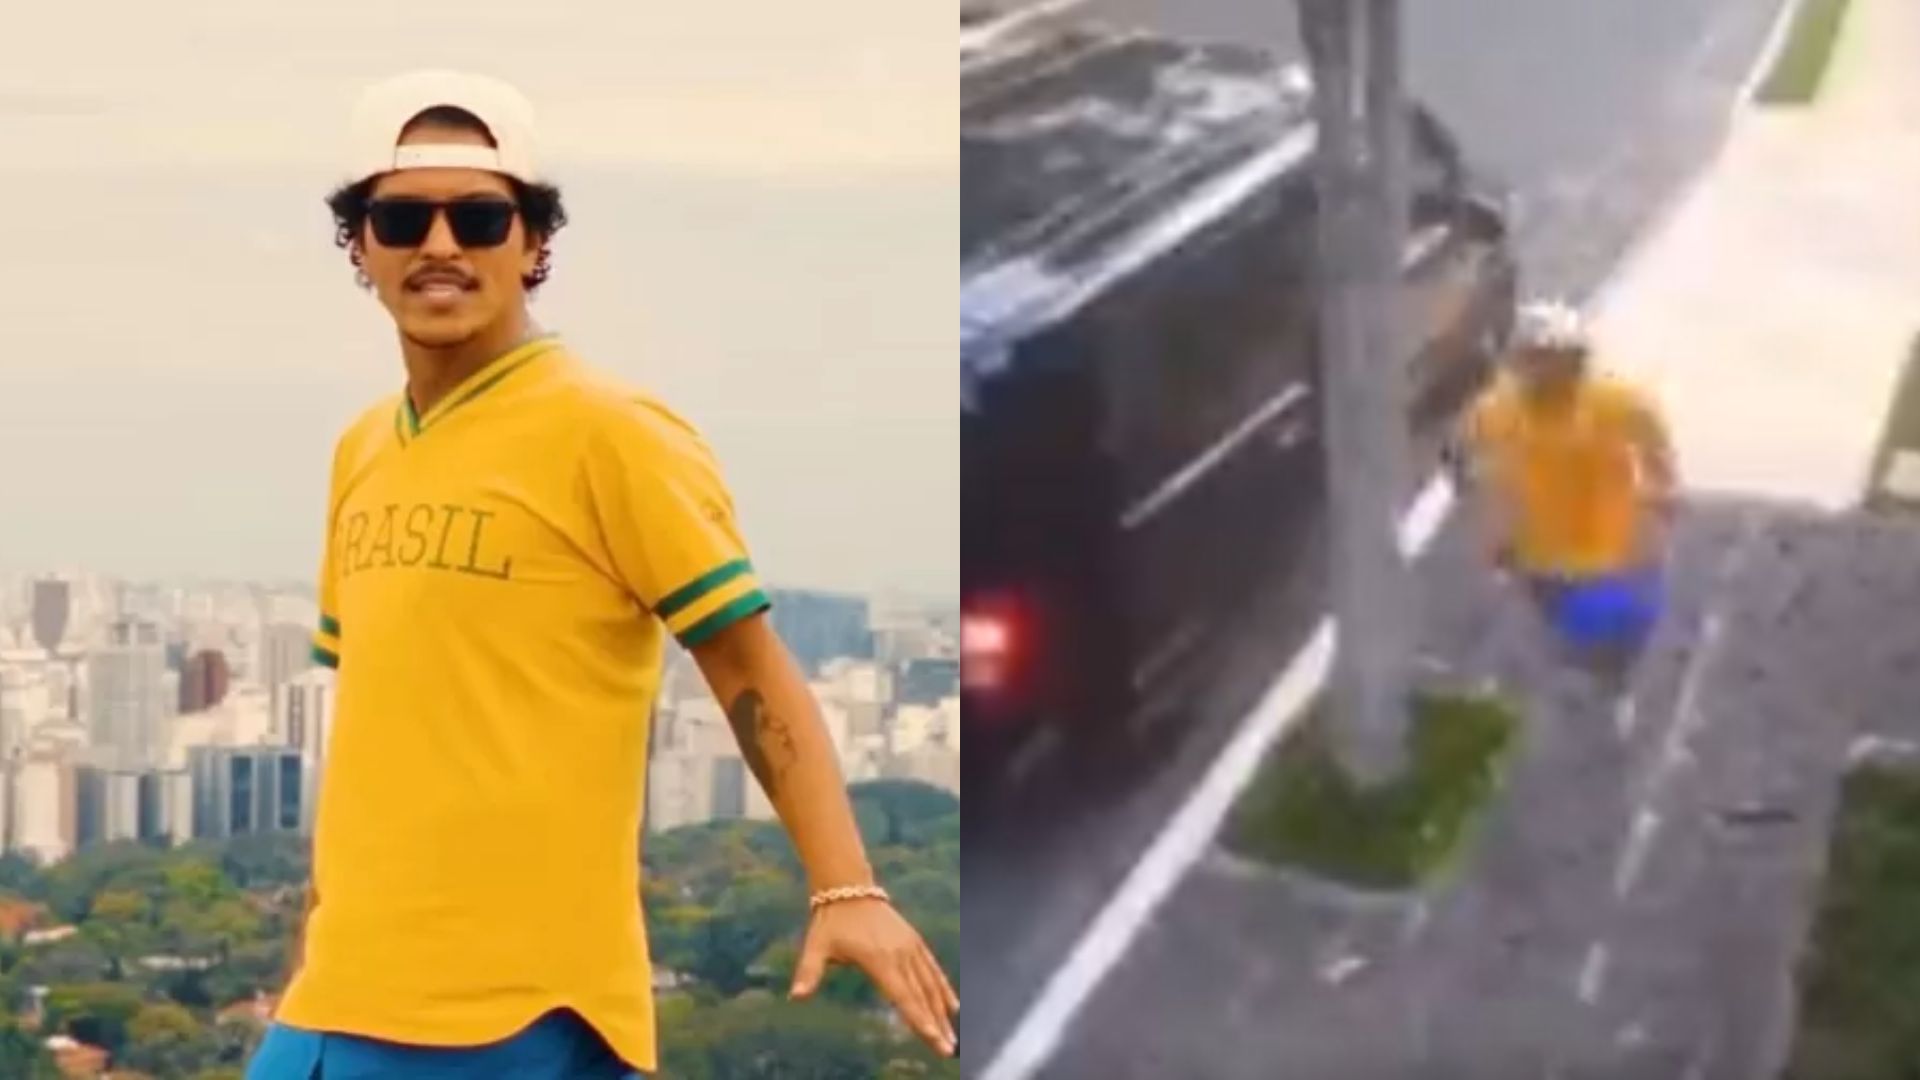 Security camera captures video of Bruno Mars in Brazil;  He watches!